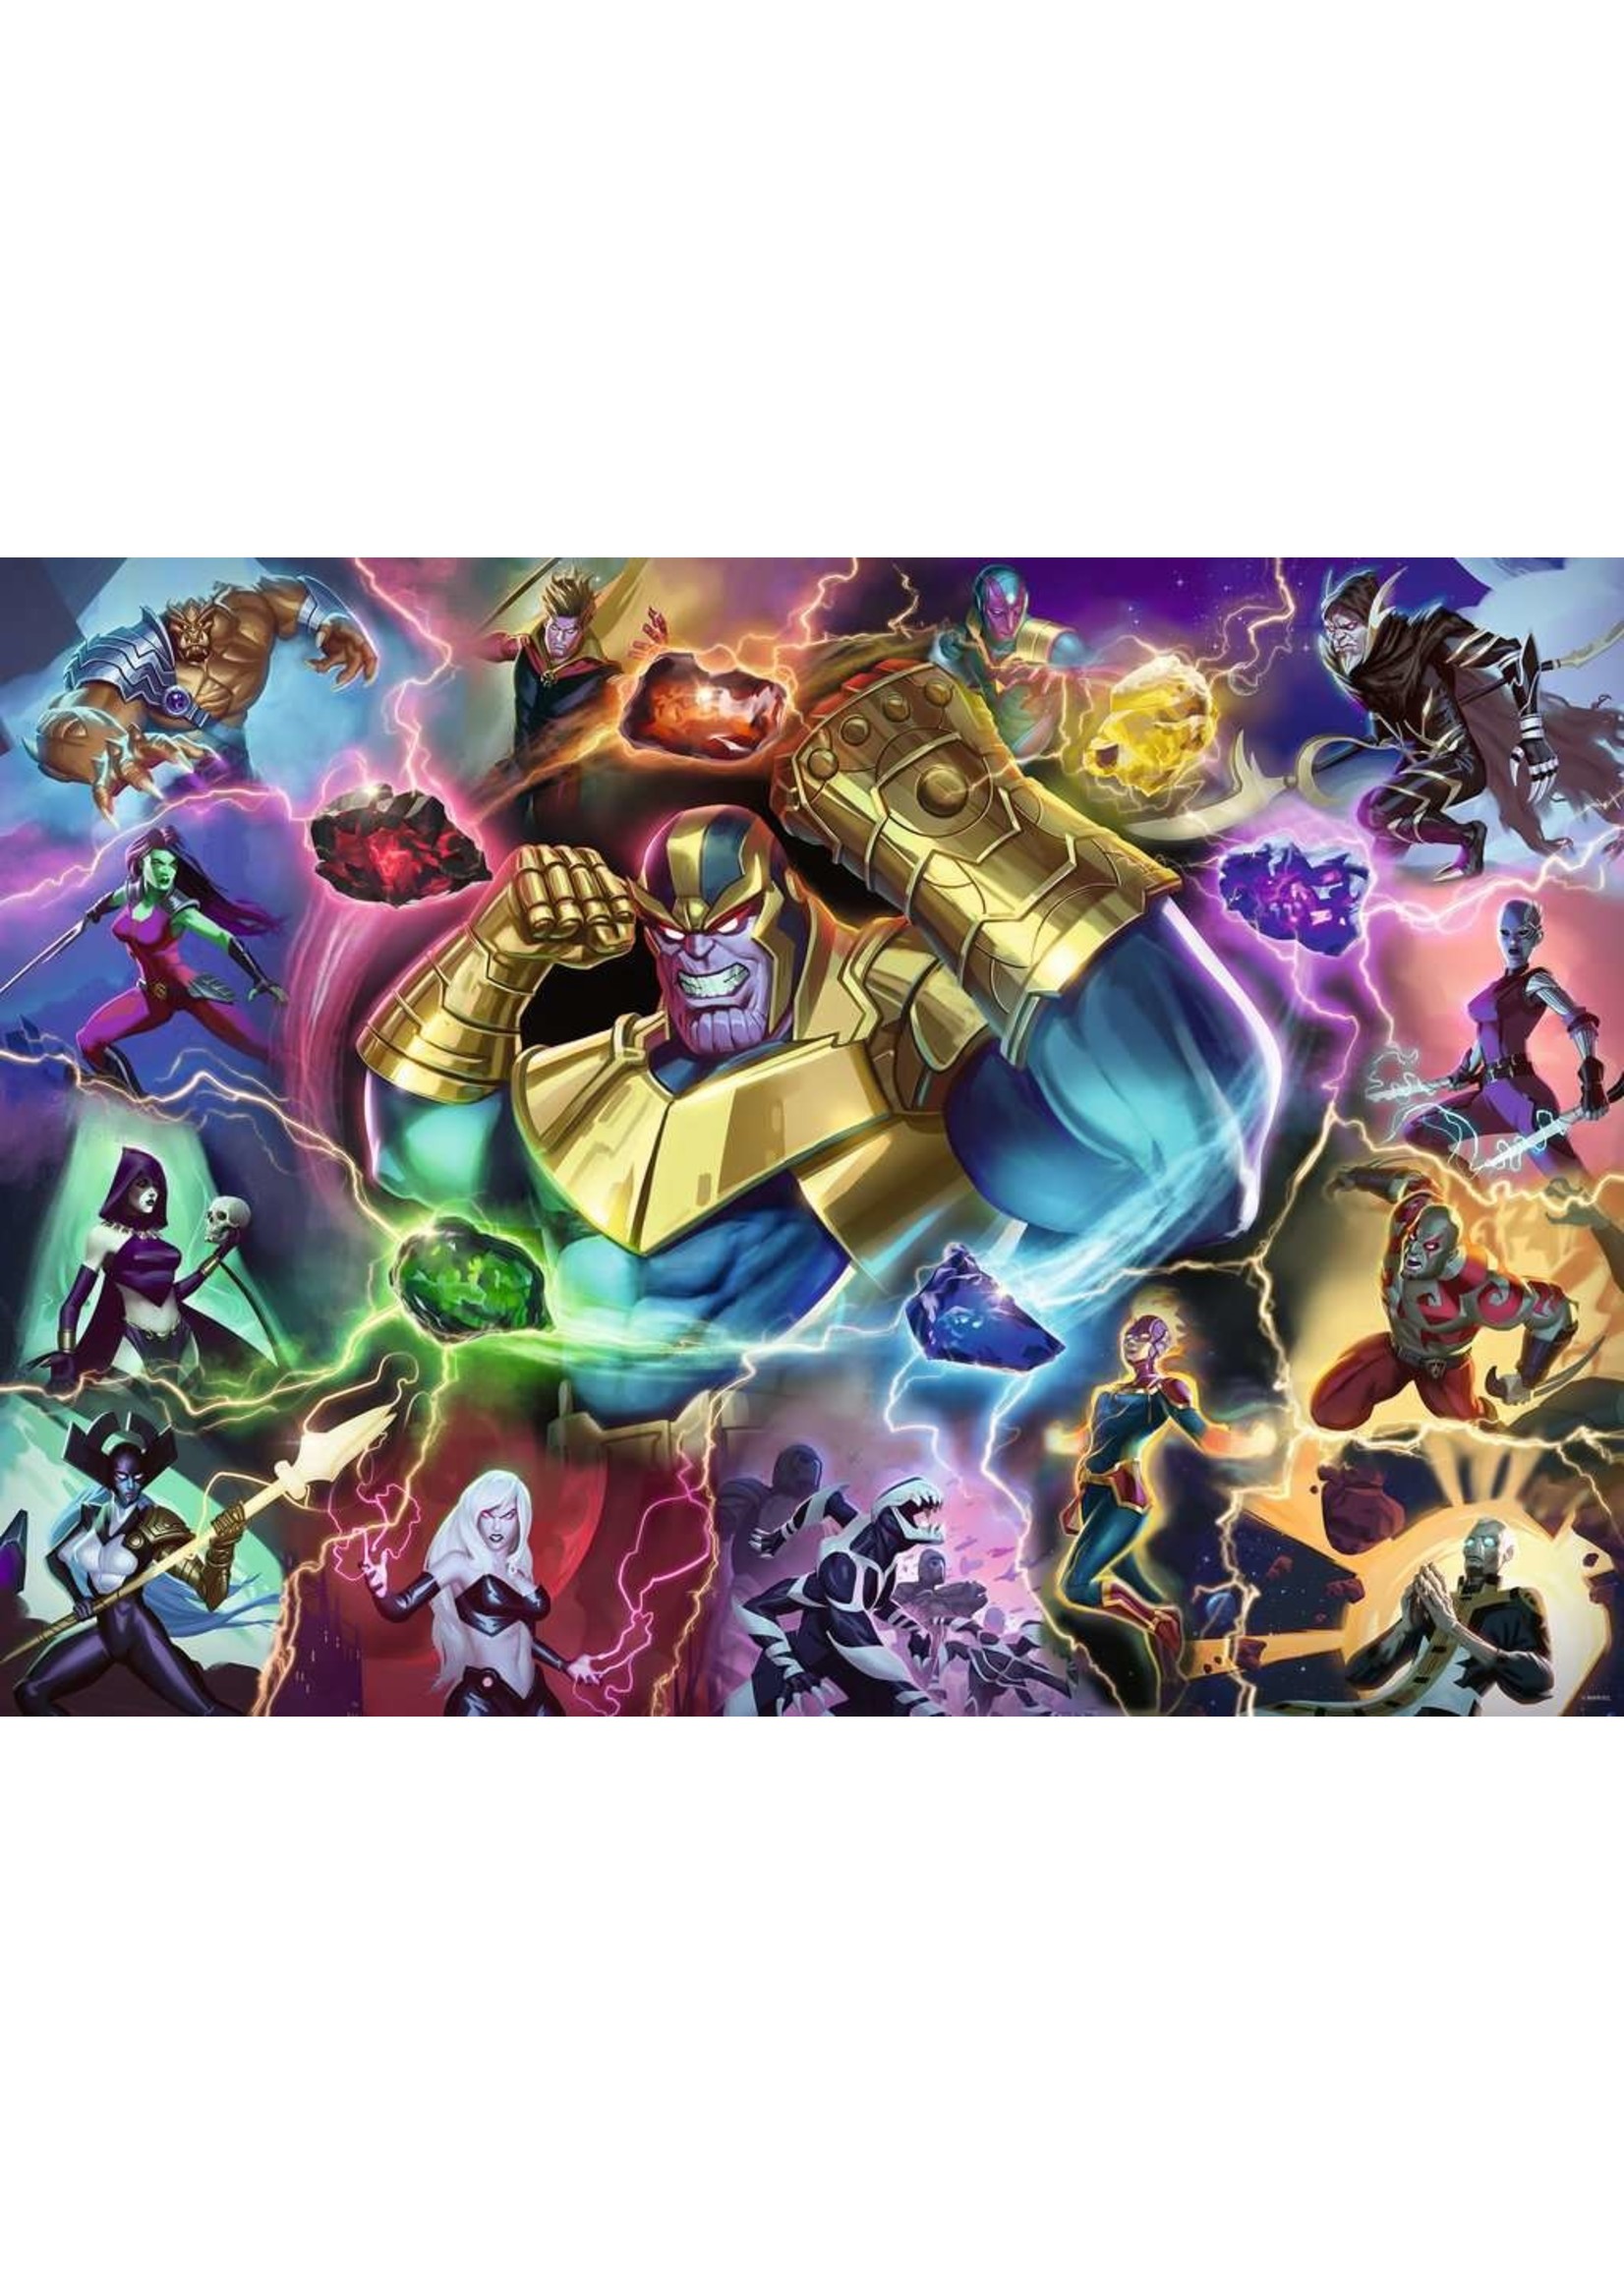 Ravensburger Marvel Villainous: Thanos - 1000 Piece Puzzle